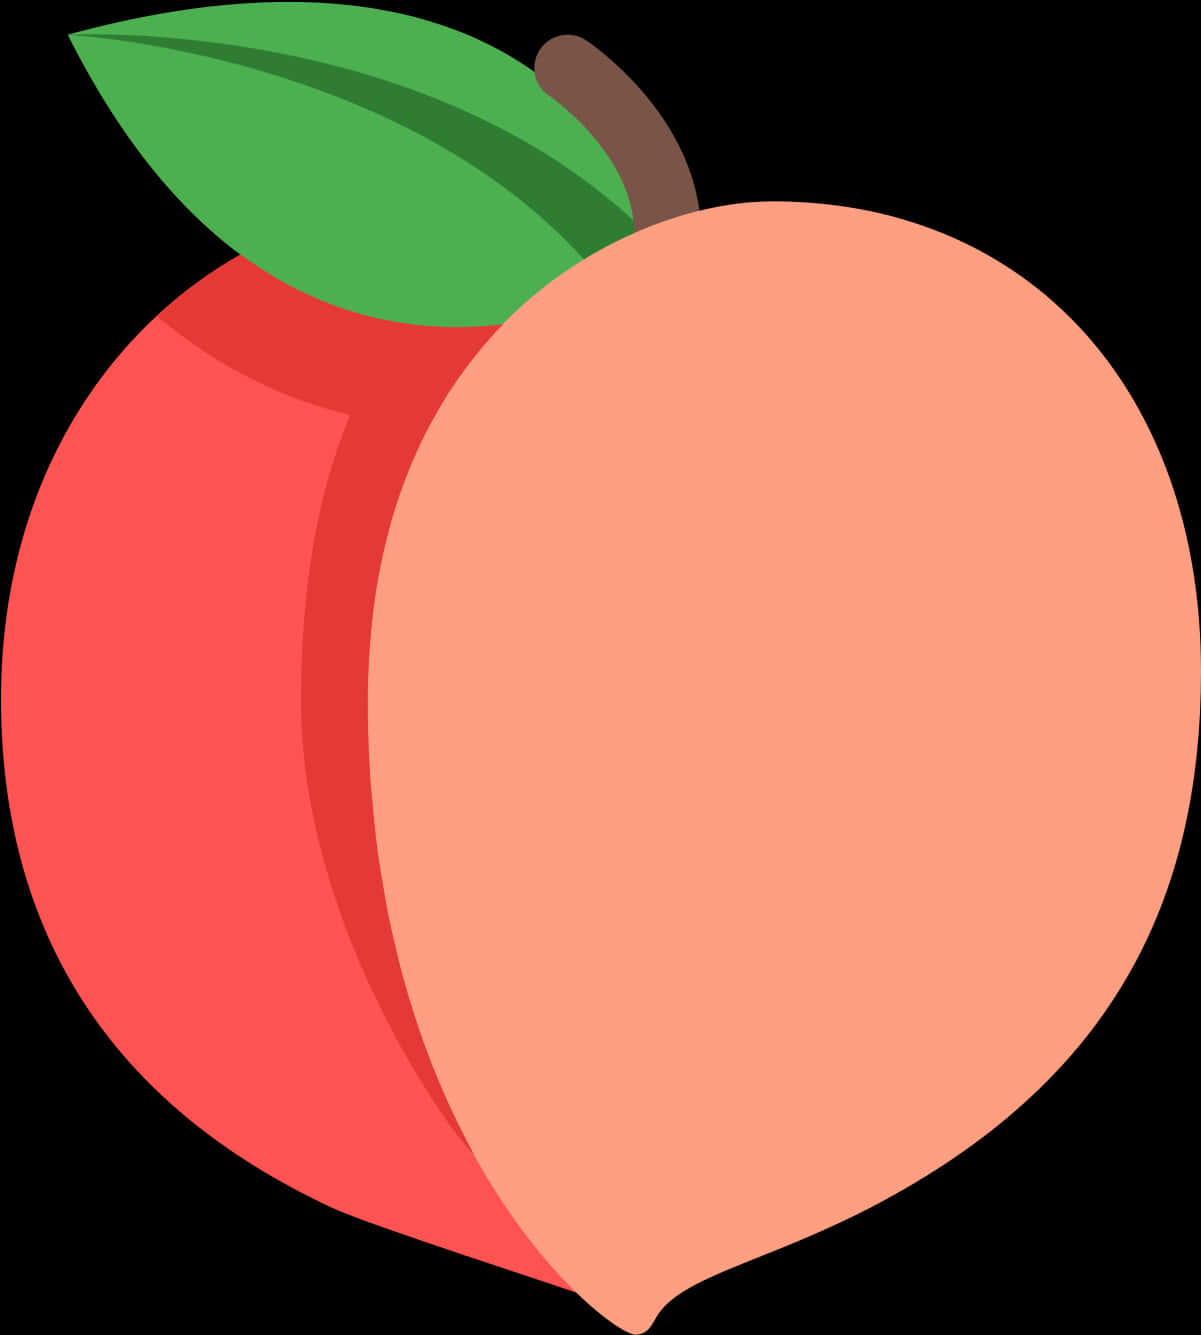 Vector Illustrationof Peach